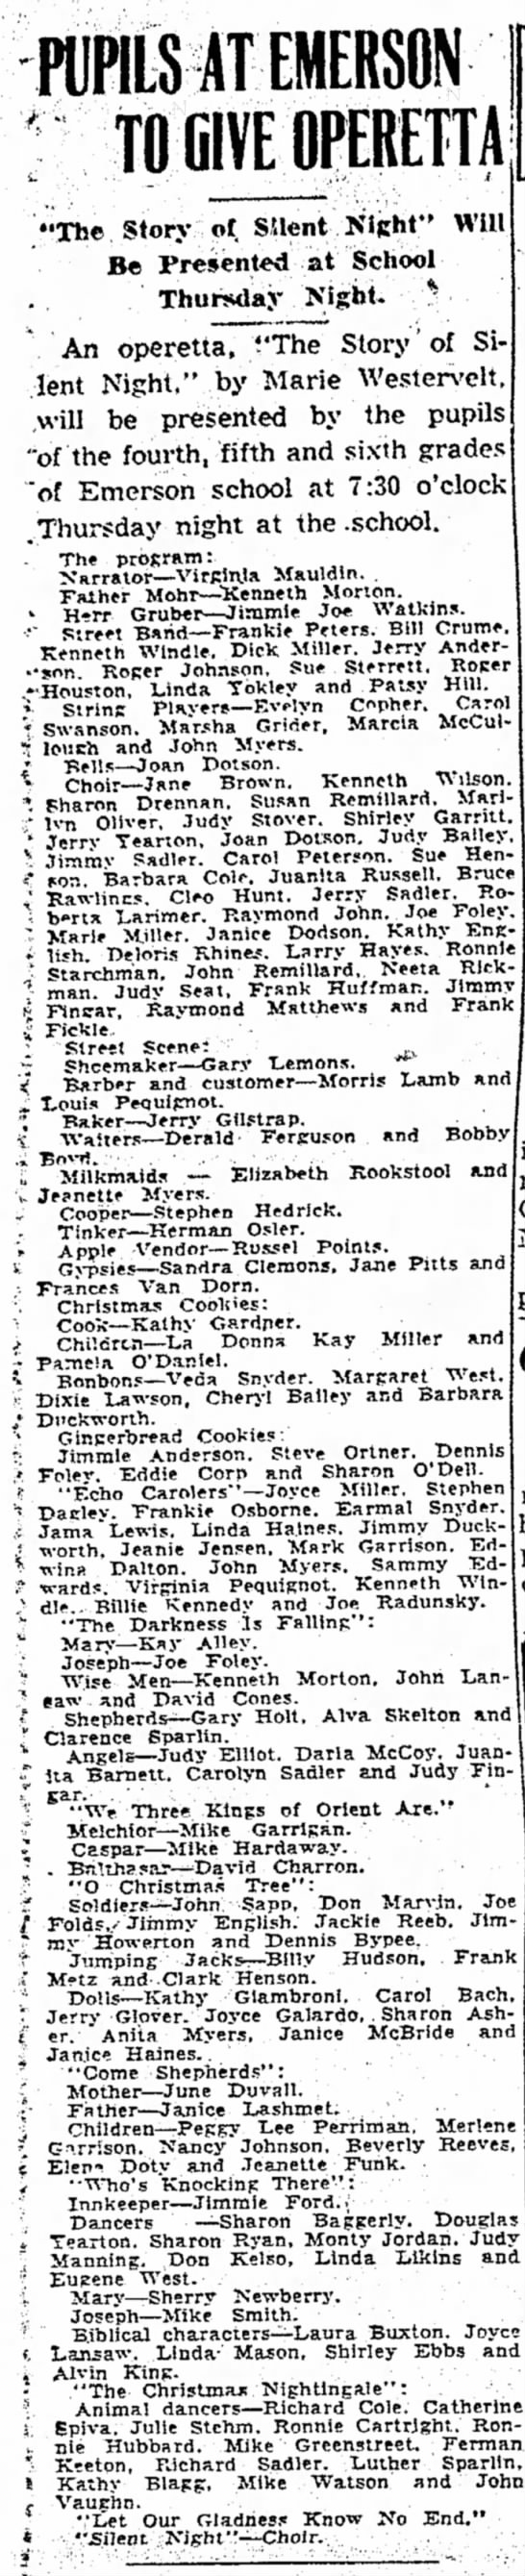 Joplin Globe 11 Dec 1955 pg8 David C Cones Sr